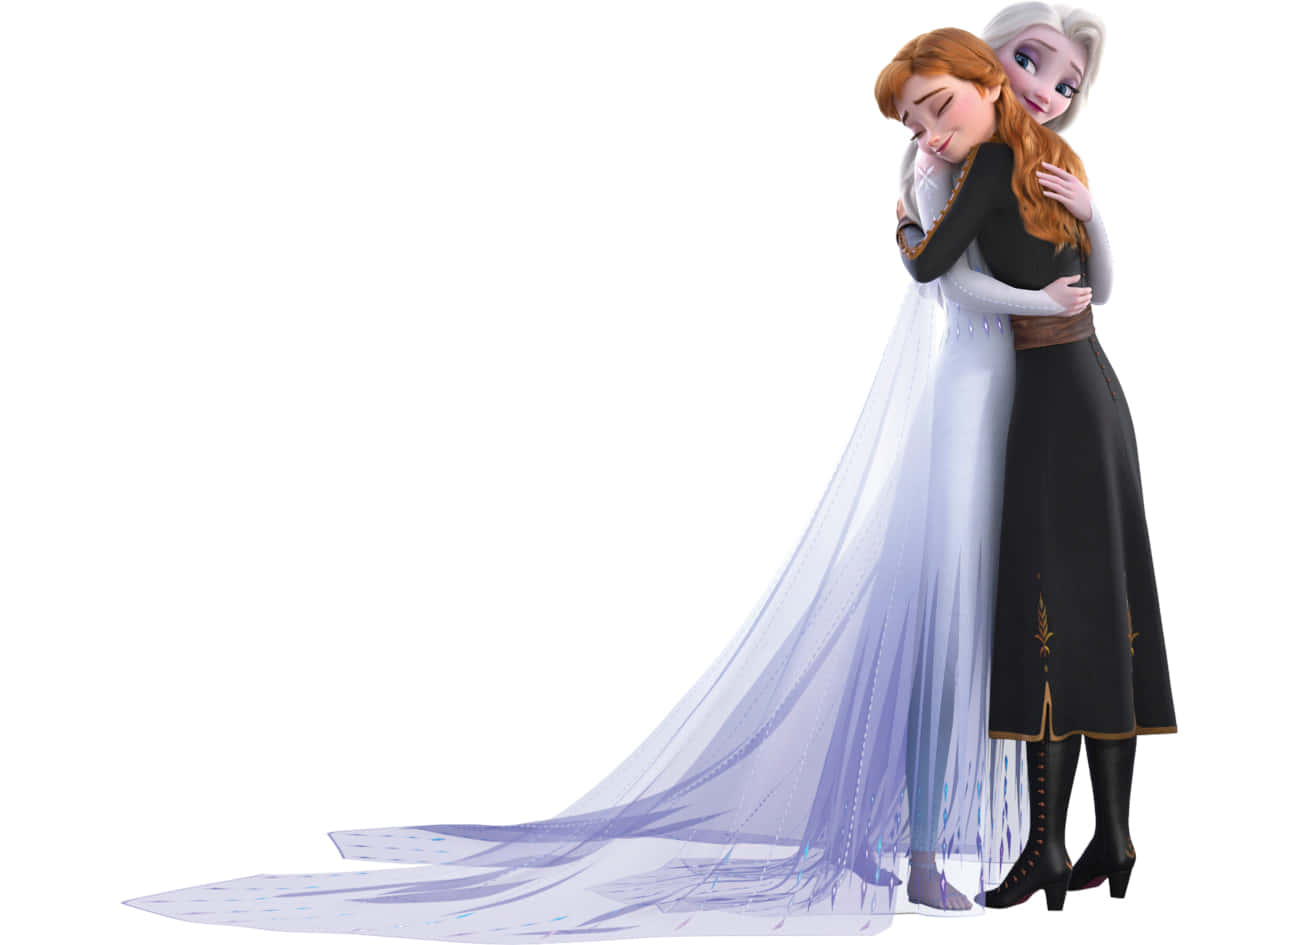 Elsa And Anna In A Frozen Scene Wallpaper